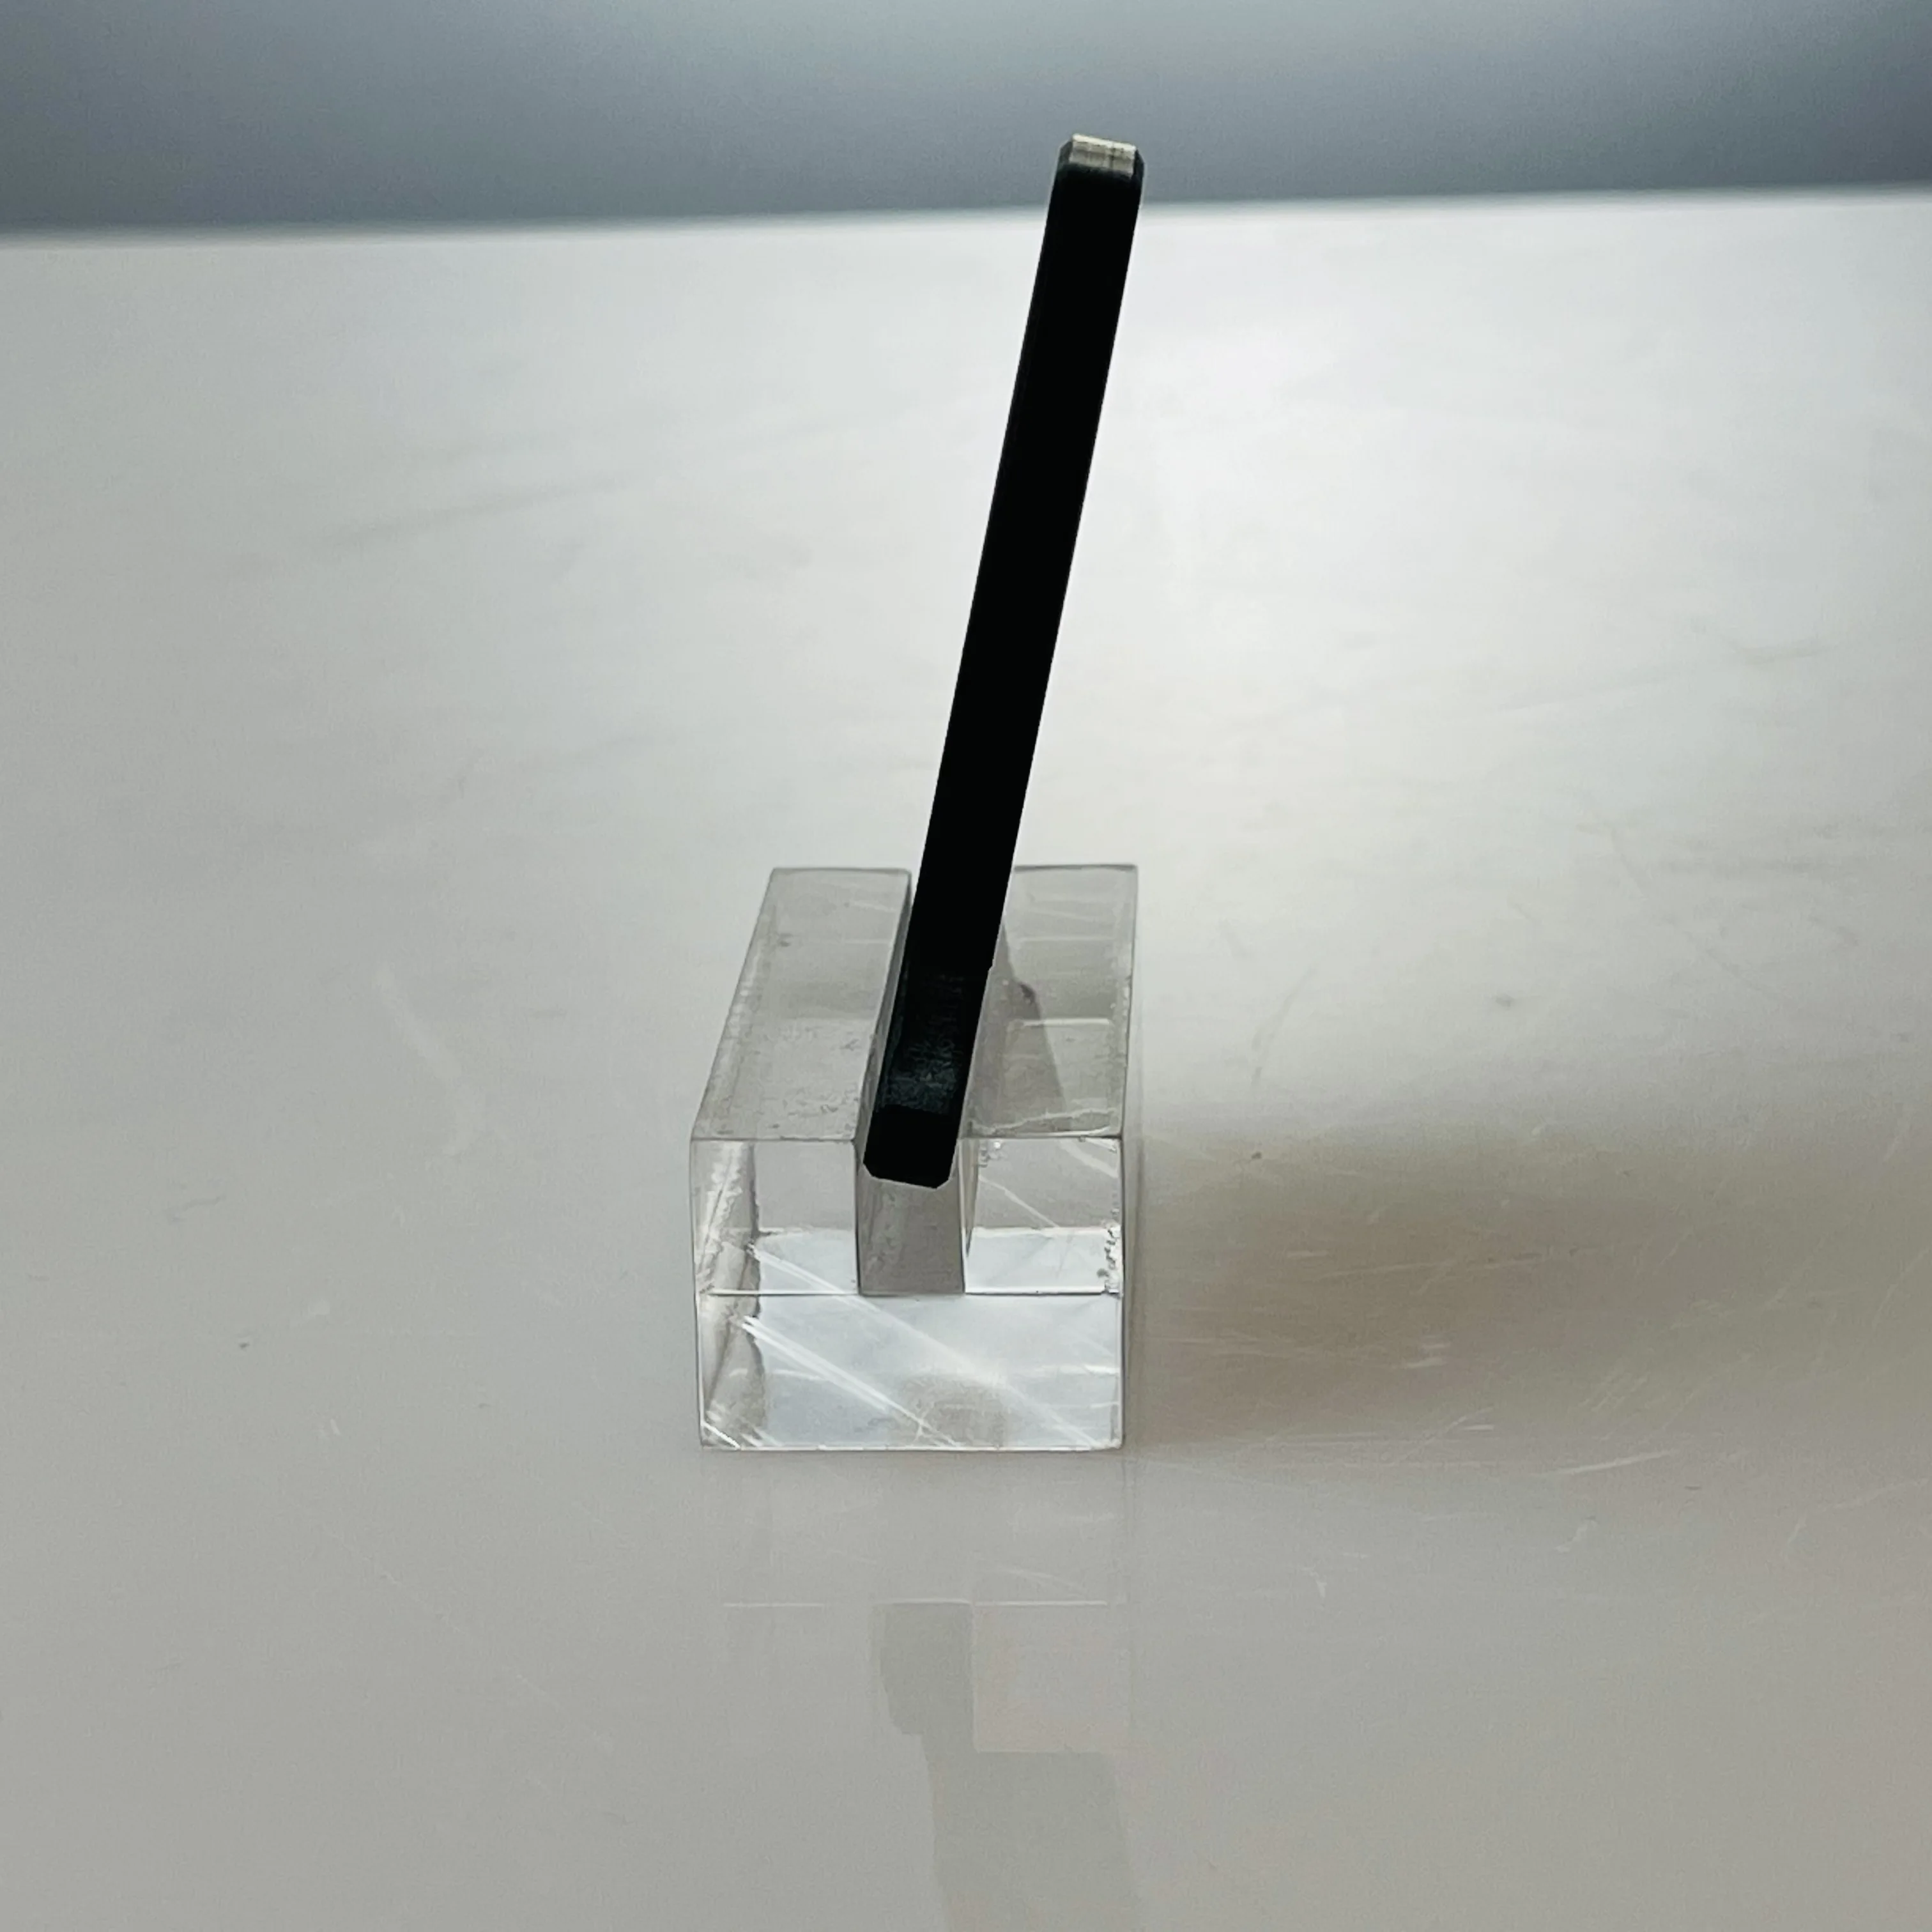 
Wholesale Borosilicate Optical Bandpass Glass Dichroic Filter For Lighting 